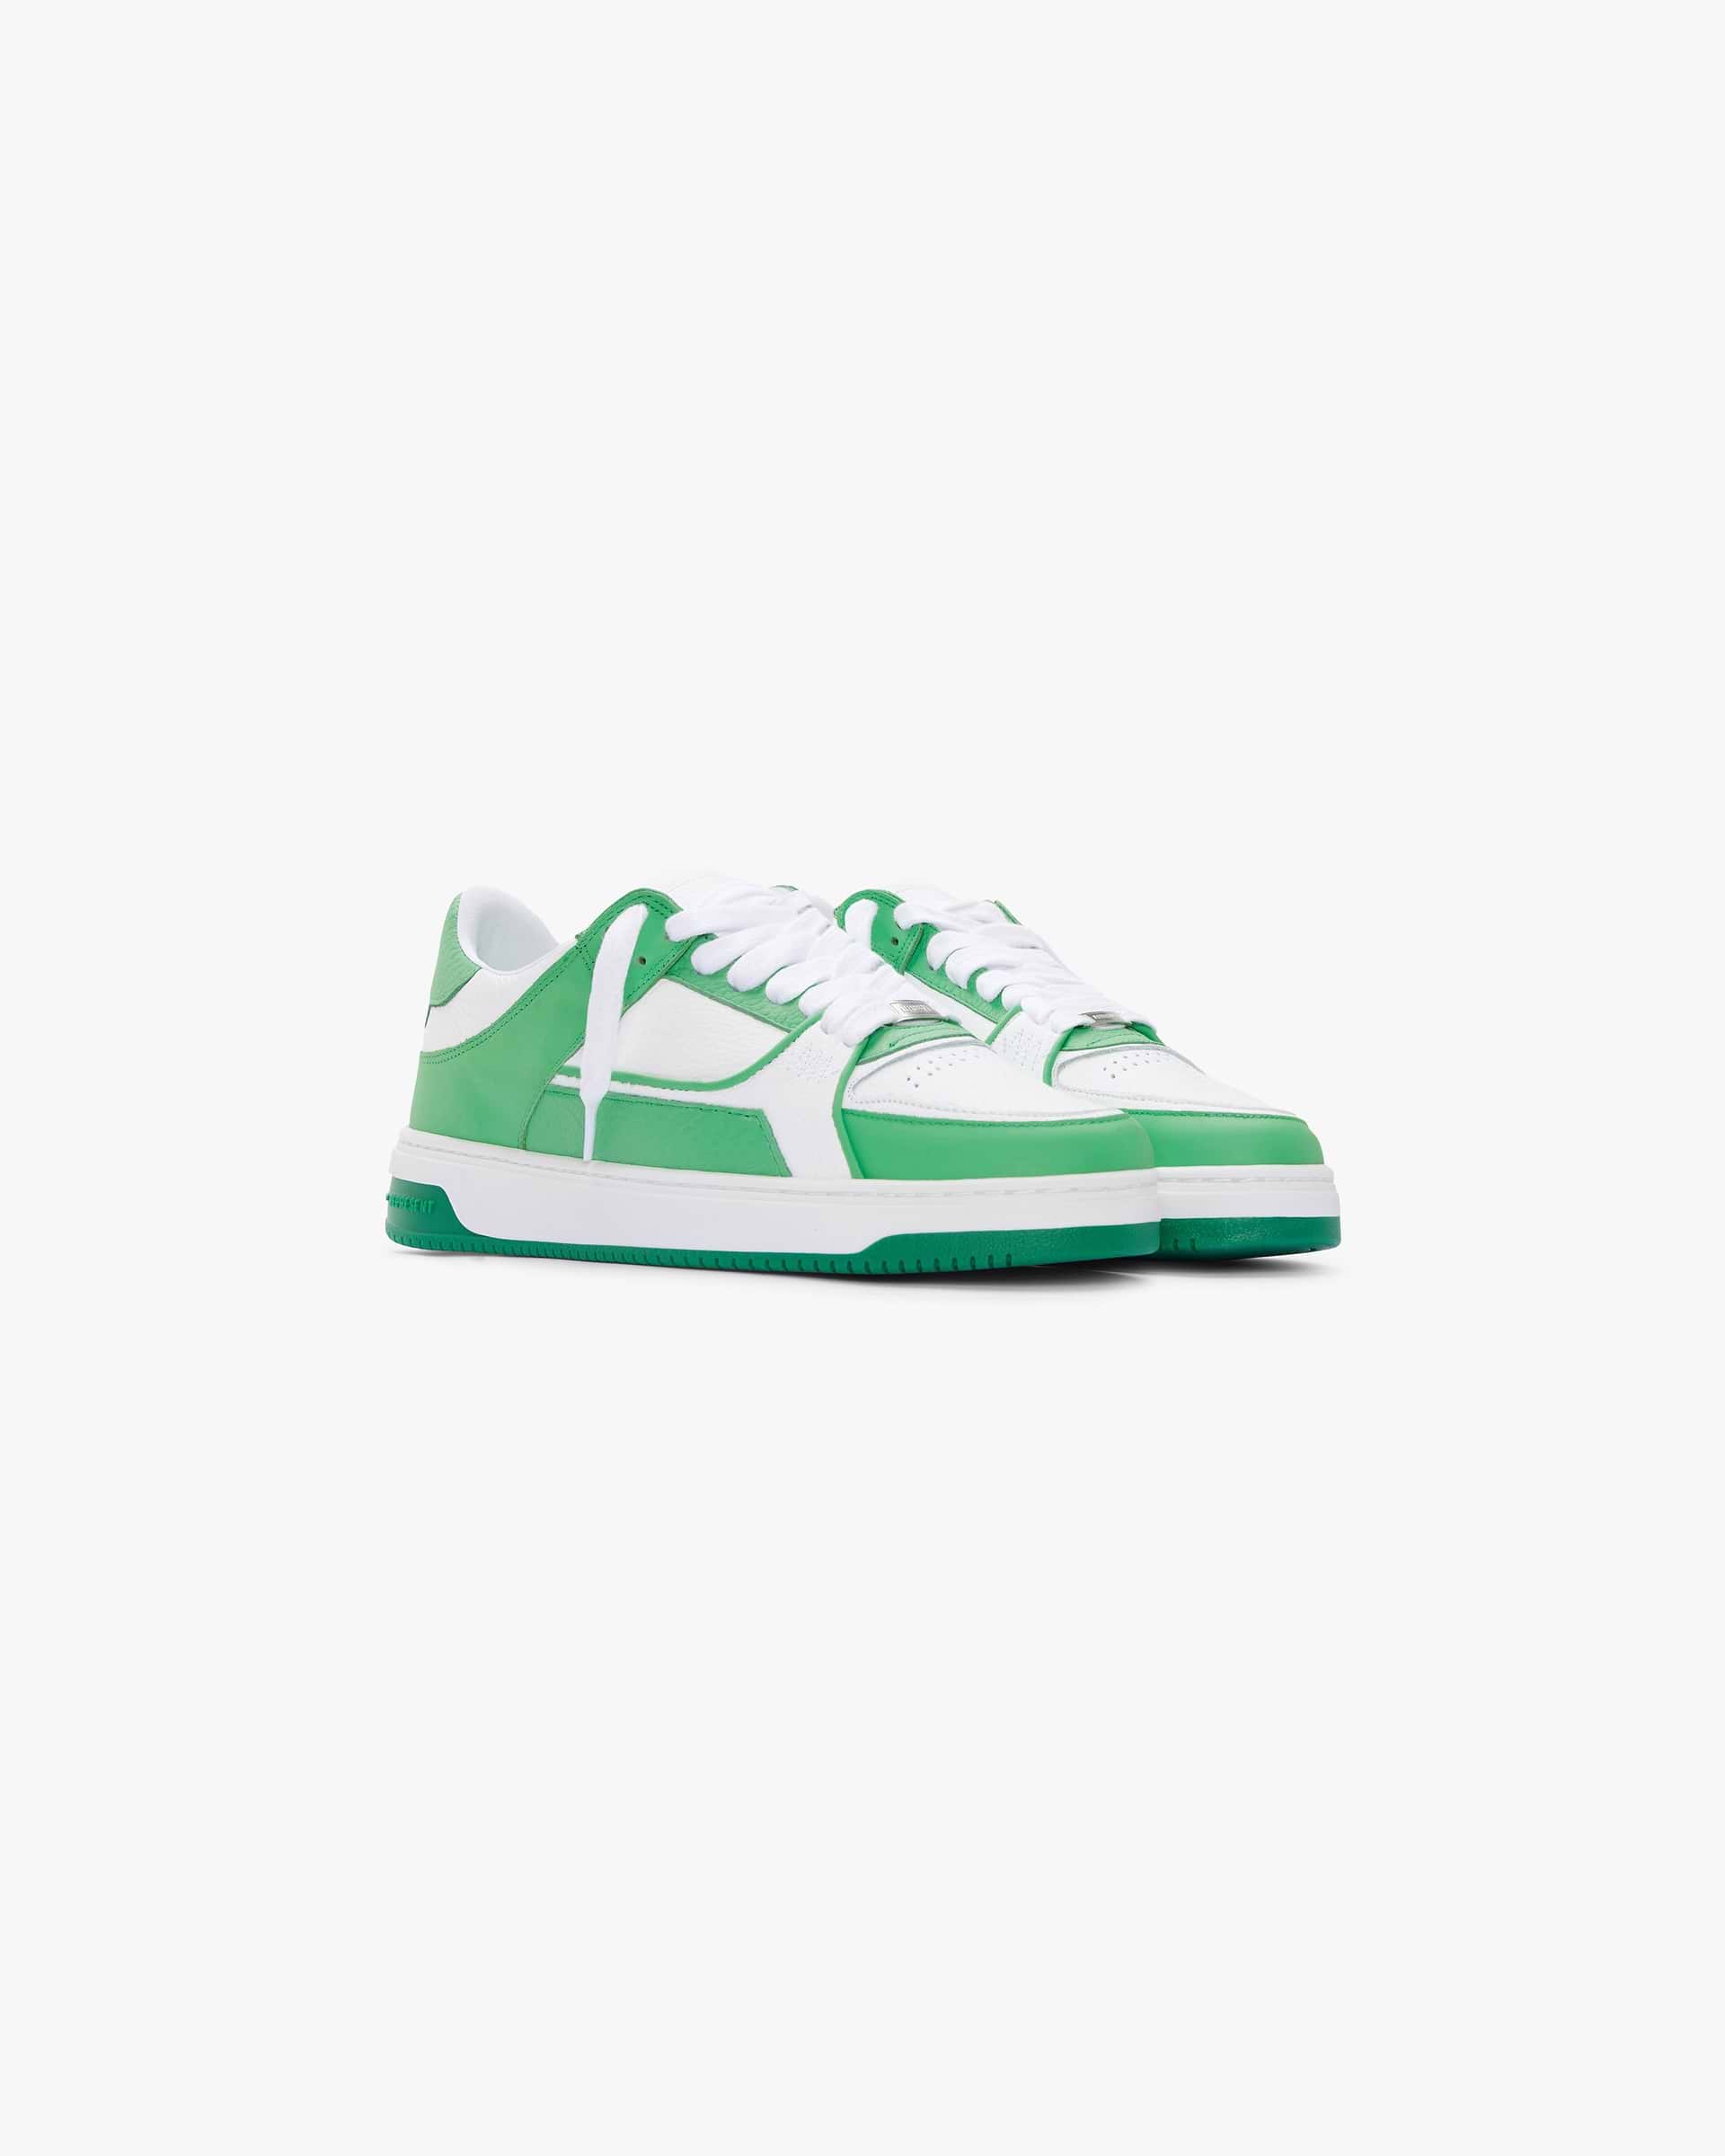 Apex | Island Green Footwear FW23 | Represent Clo